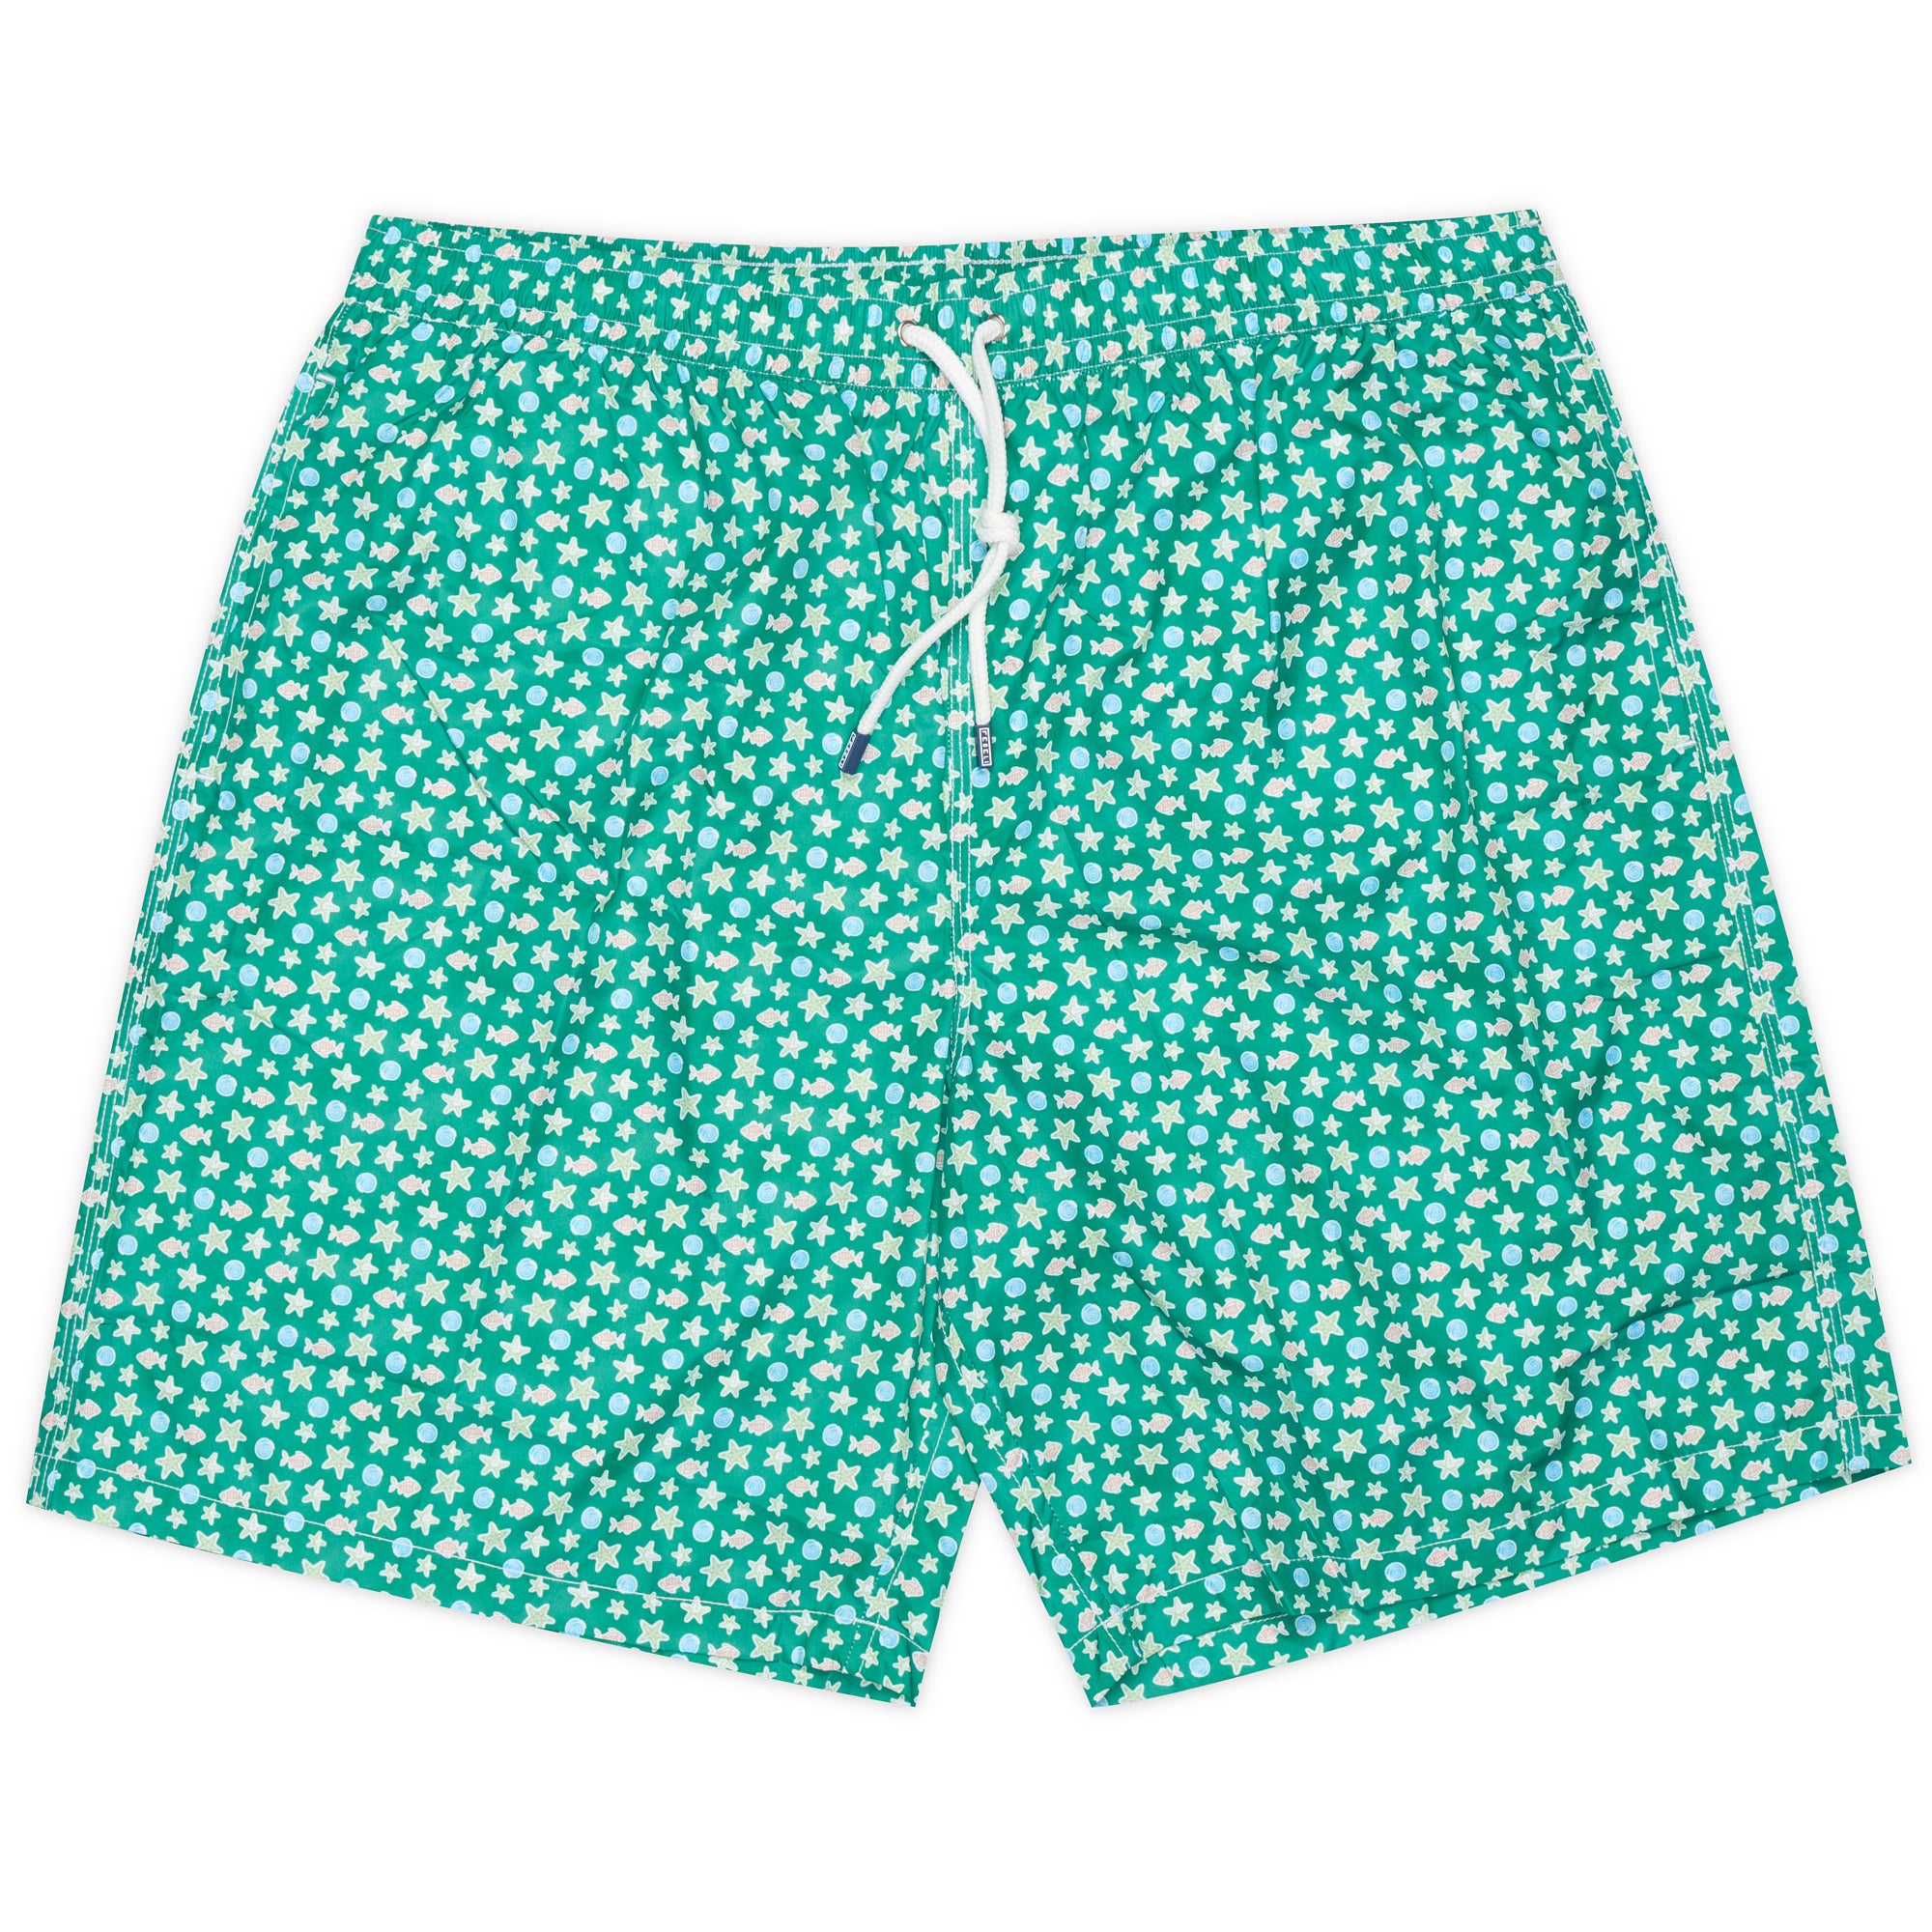 FEDELI Green Sea Animal Print Positano Airstop Swim Shorts Trunks 40/41 NEW XXXL FEDELI